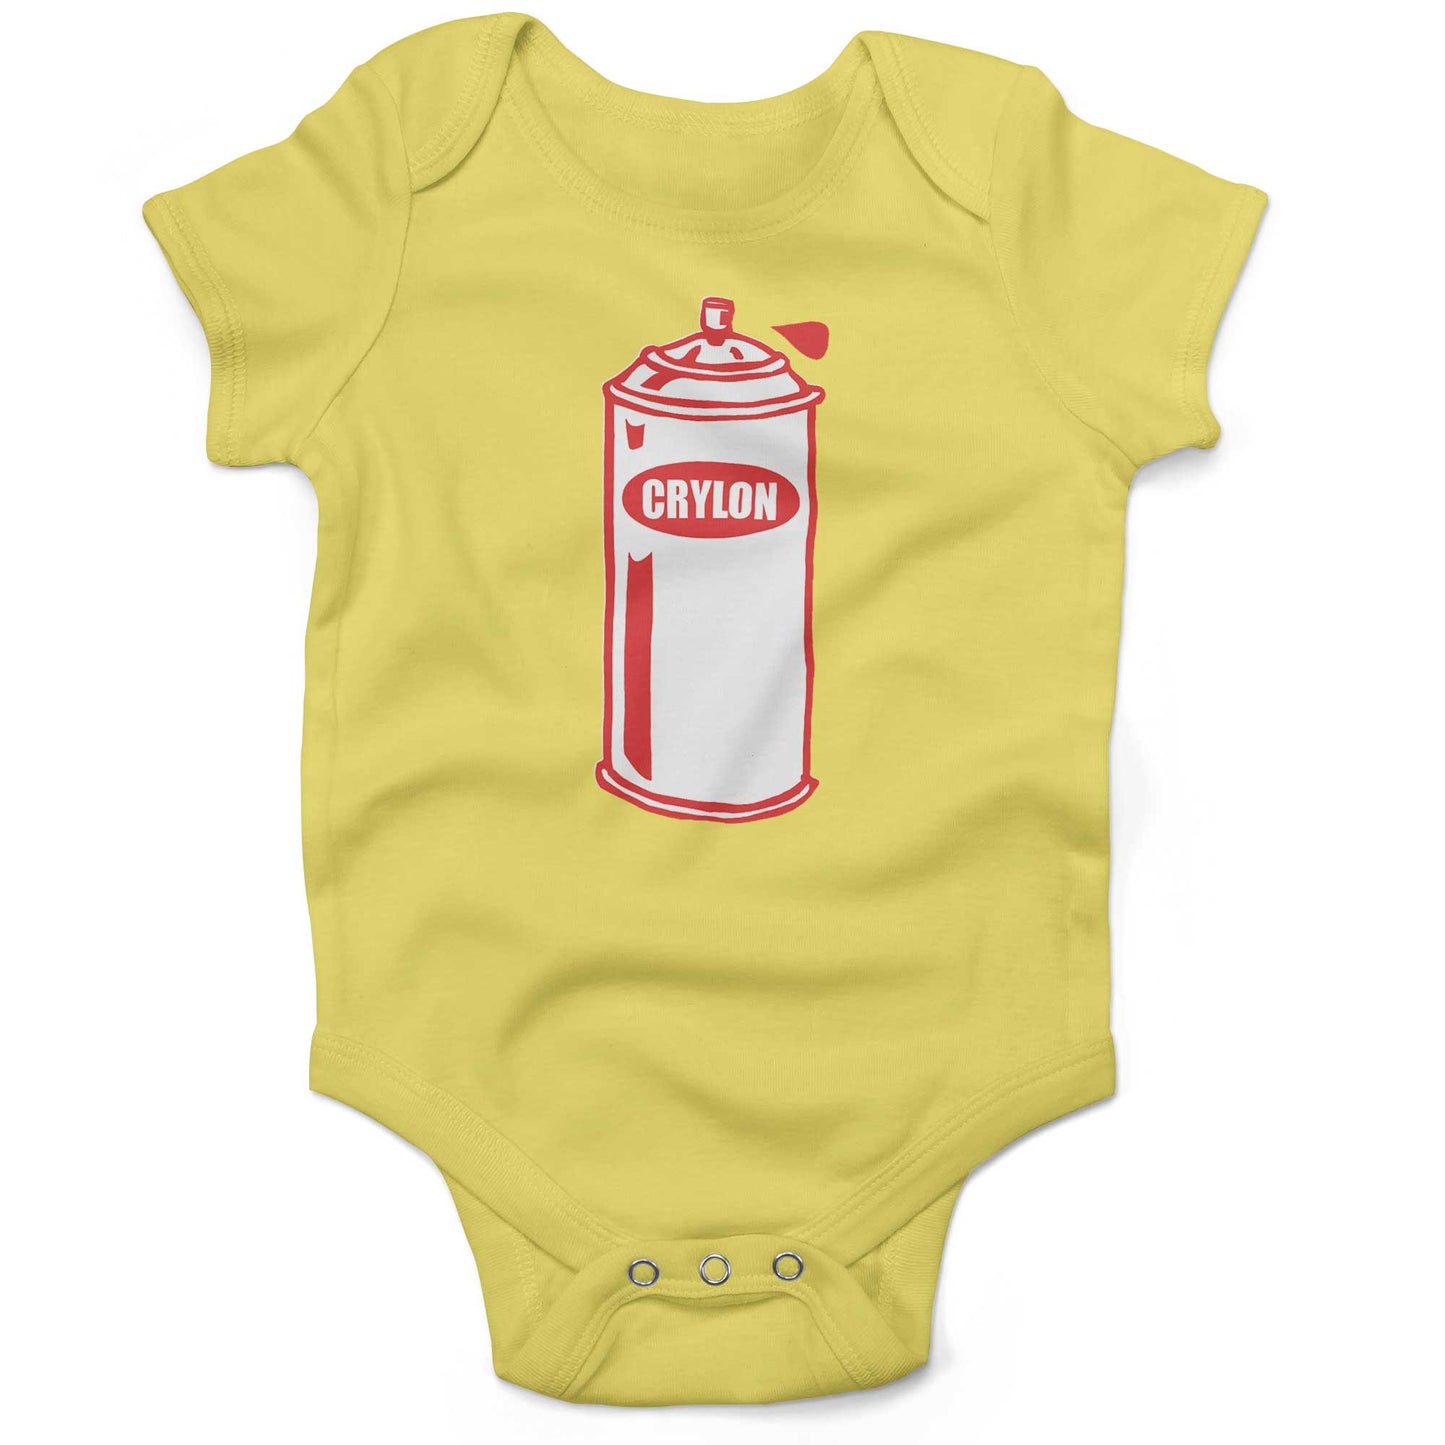 Crylon Cans Infant Bodysuit or Raglan Tee-Yellow-3-6 months